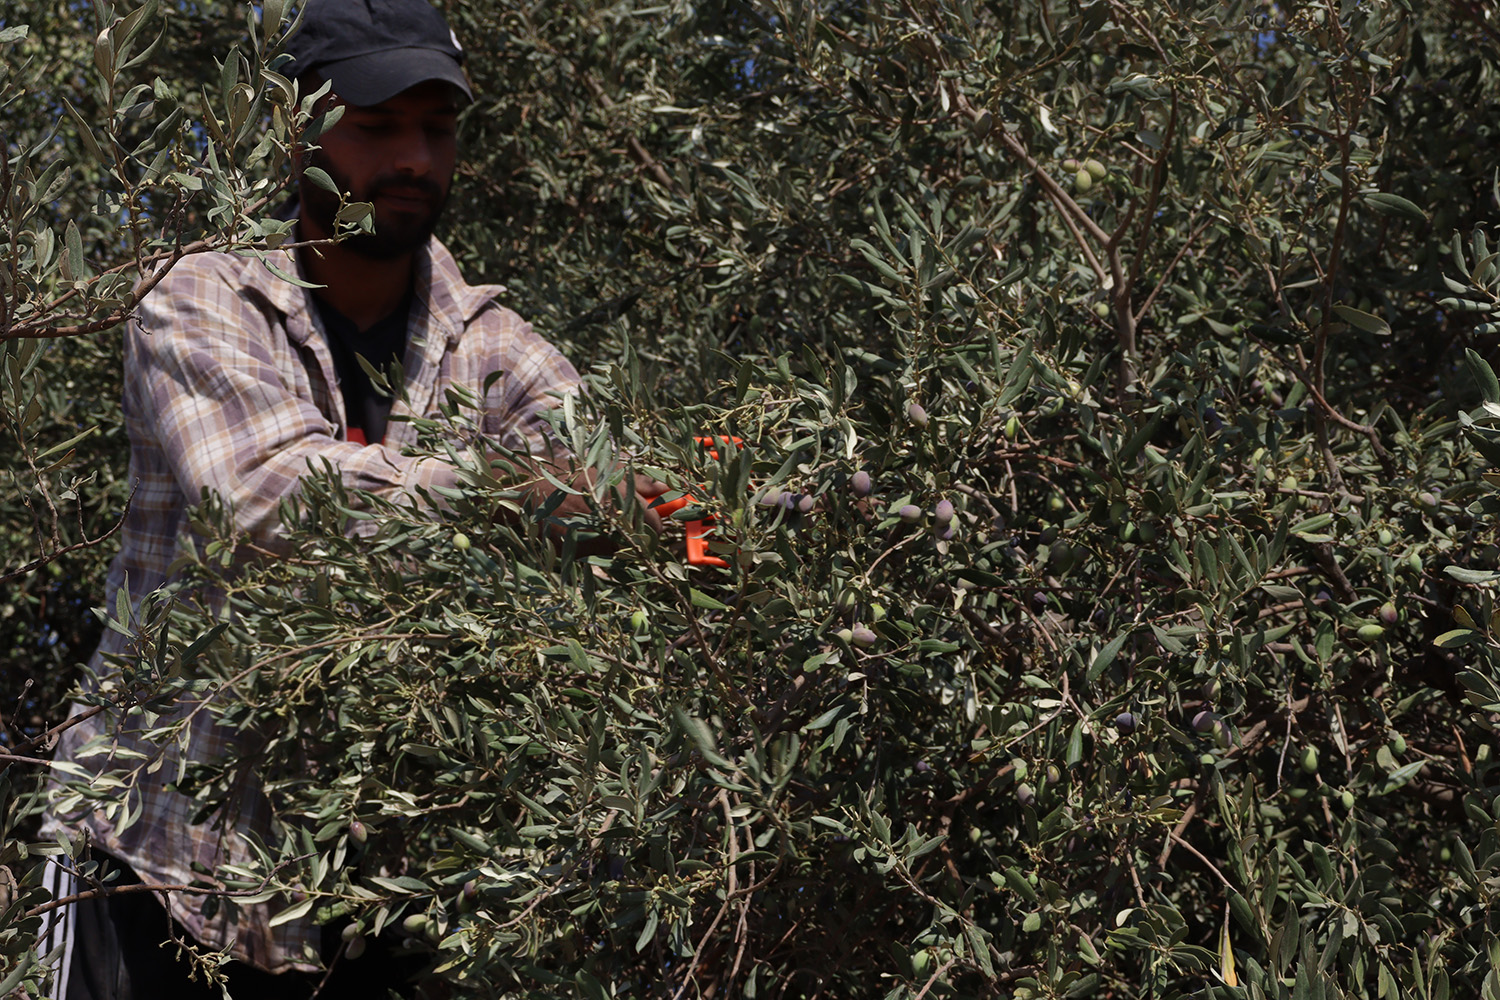 A Palestinian farmer harvests olives